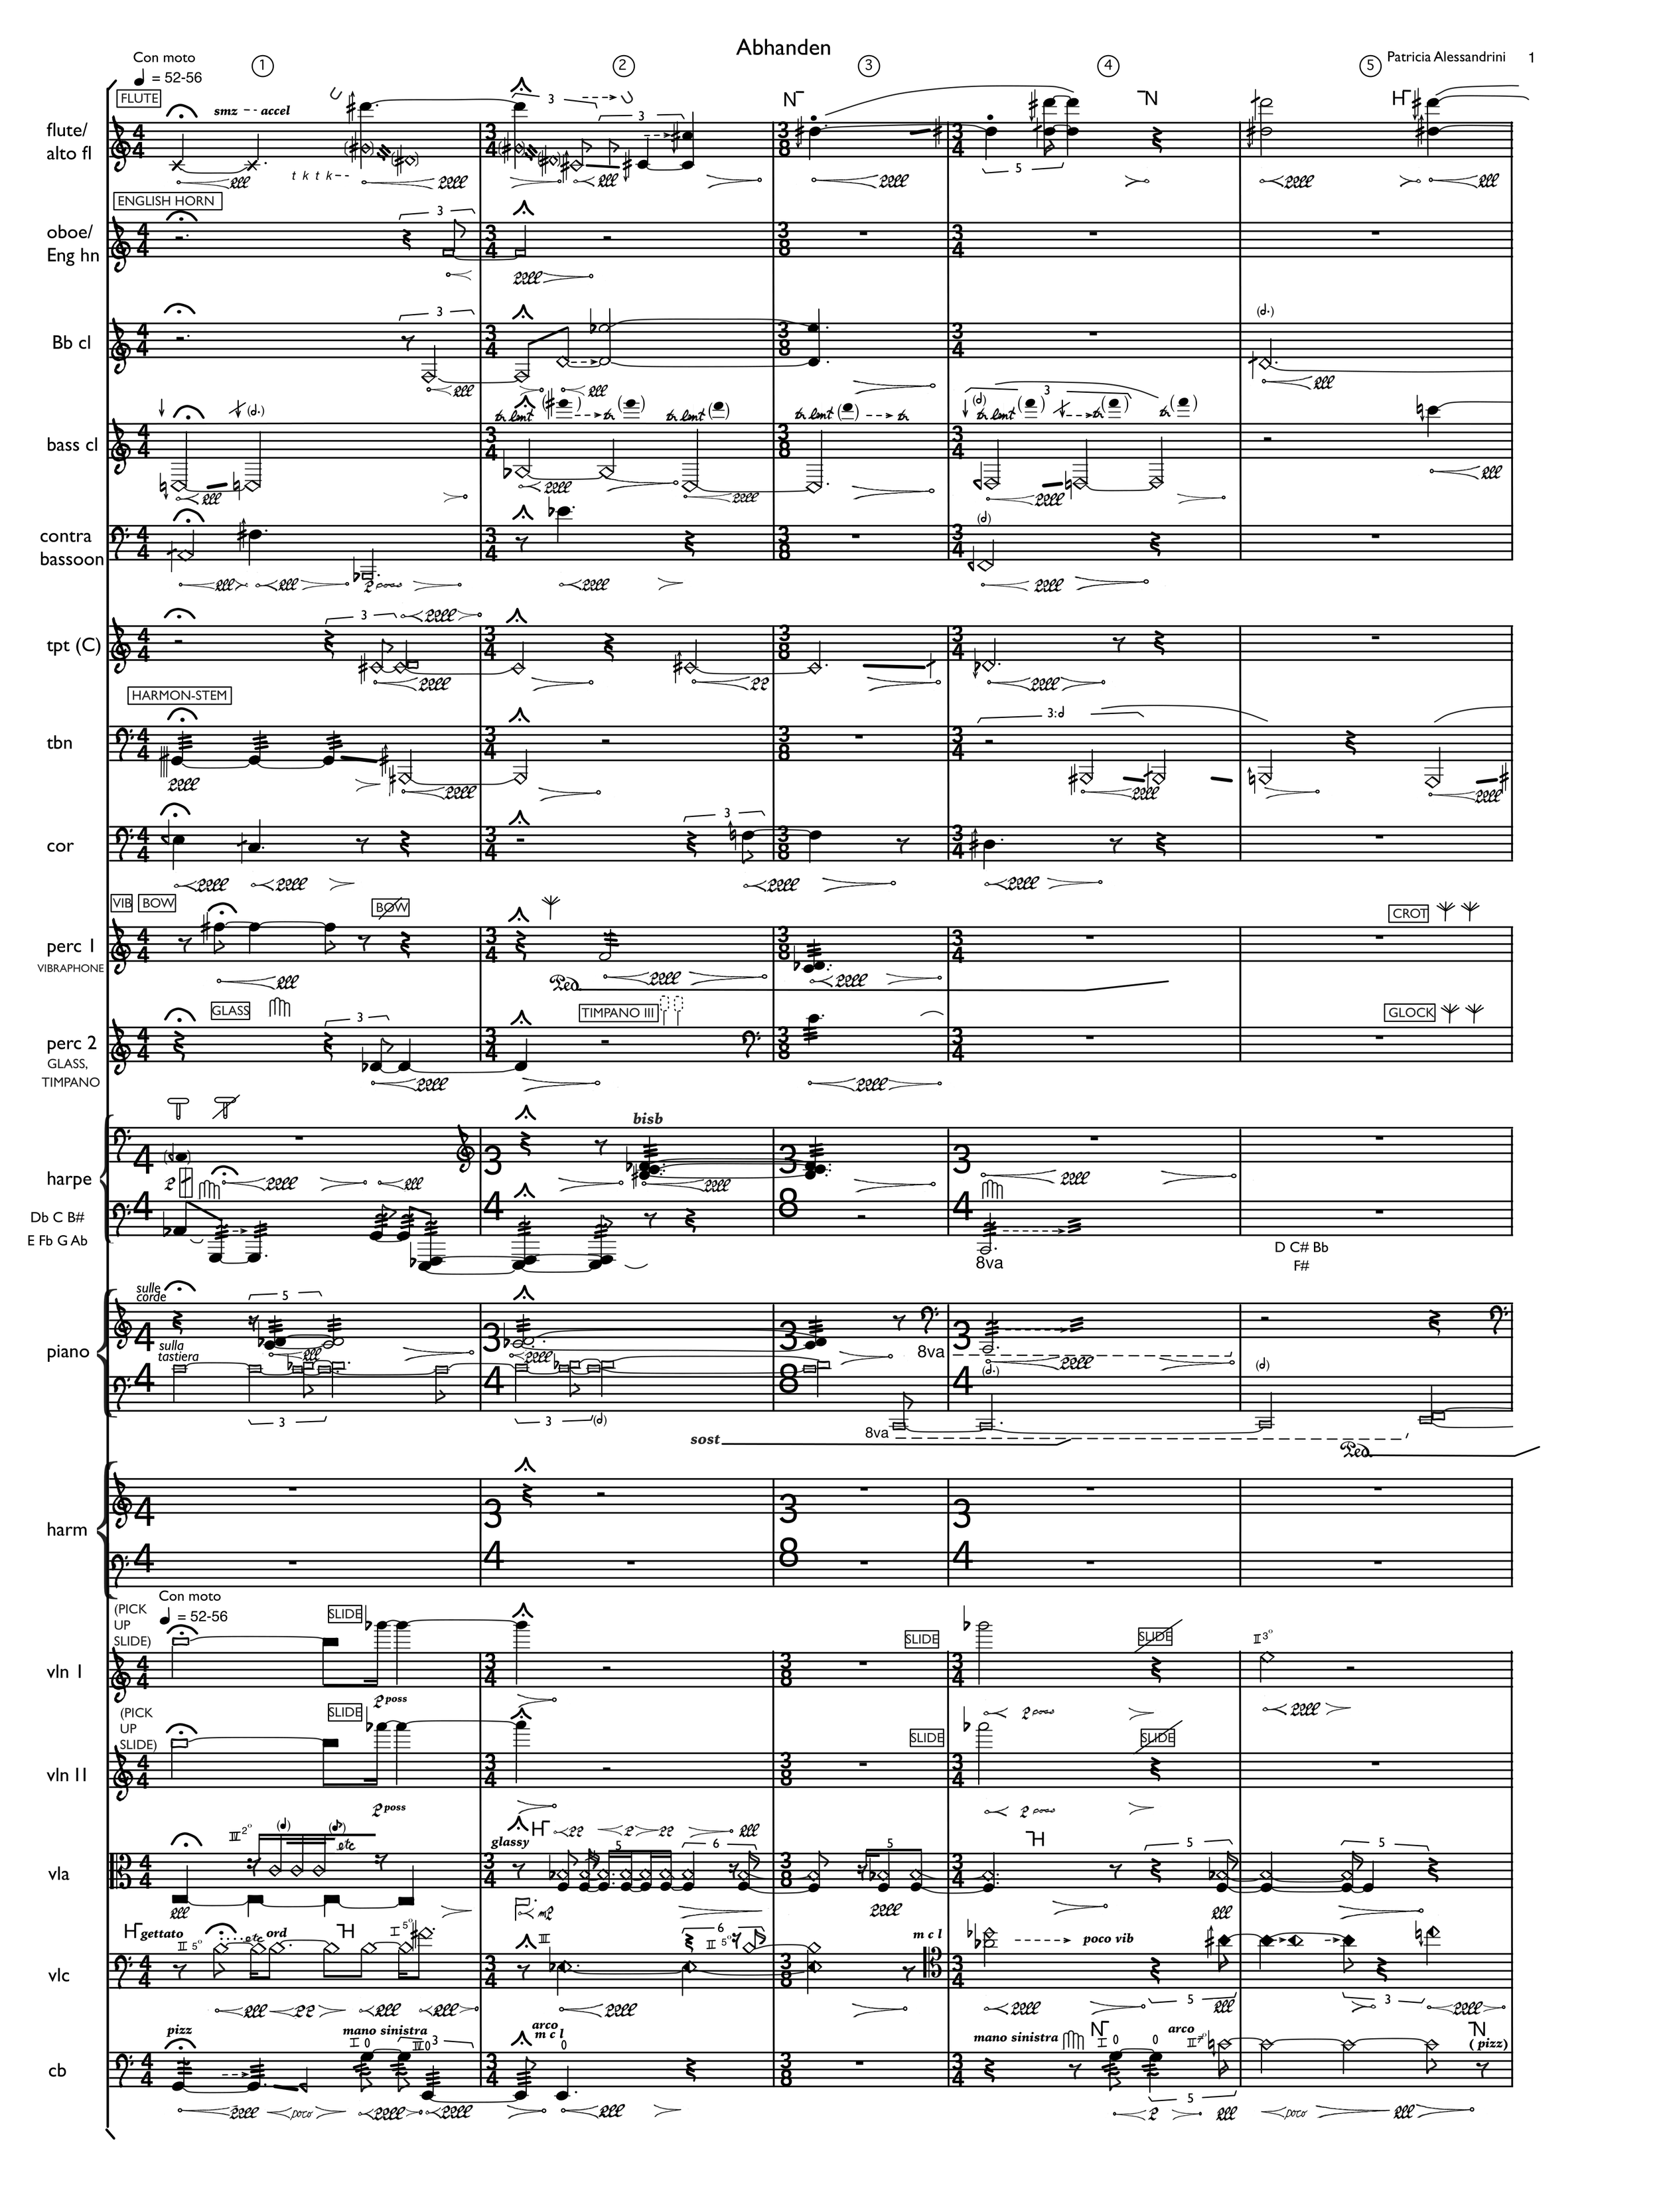 Alessandrini-Abhanden-00-score-notes-01.png